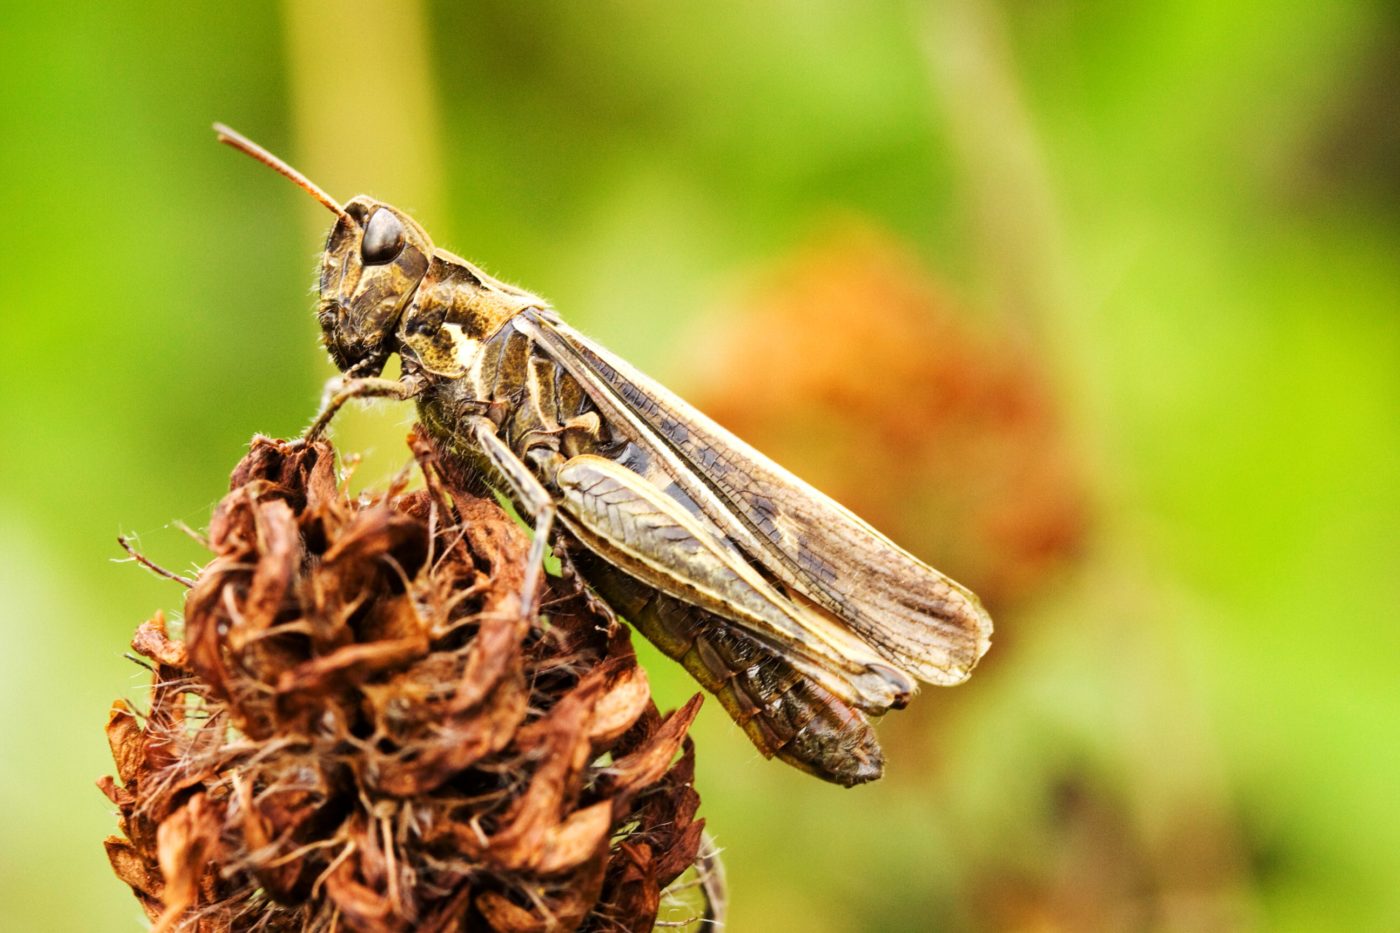 Grasshopper resting in the undergrowth